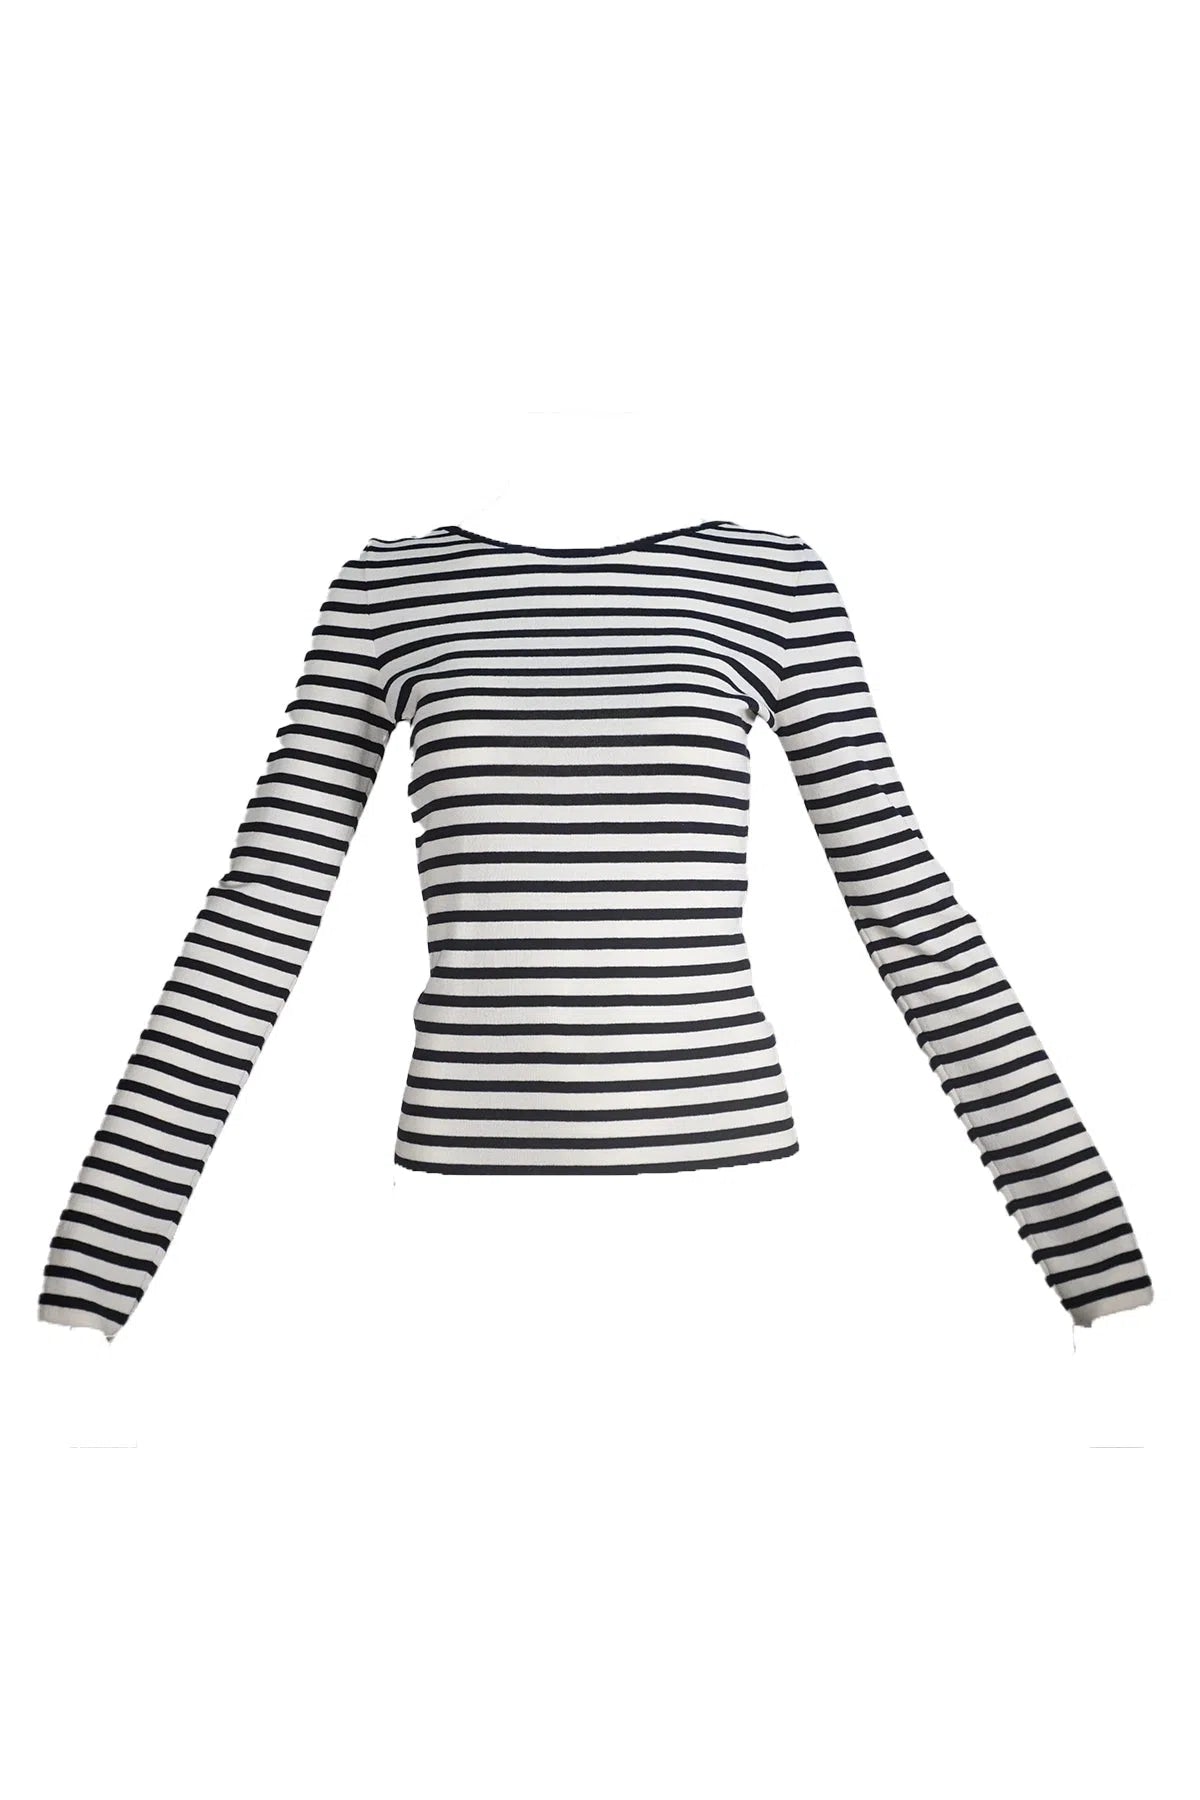 Chanel Navy White Stripe Knit Shirt 2010C Size 34